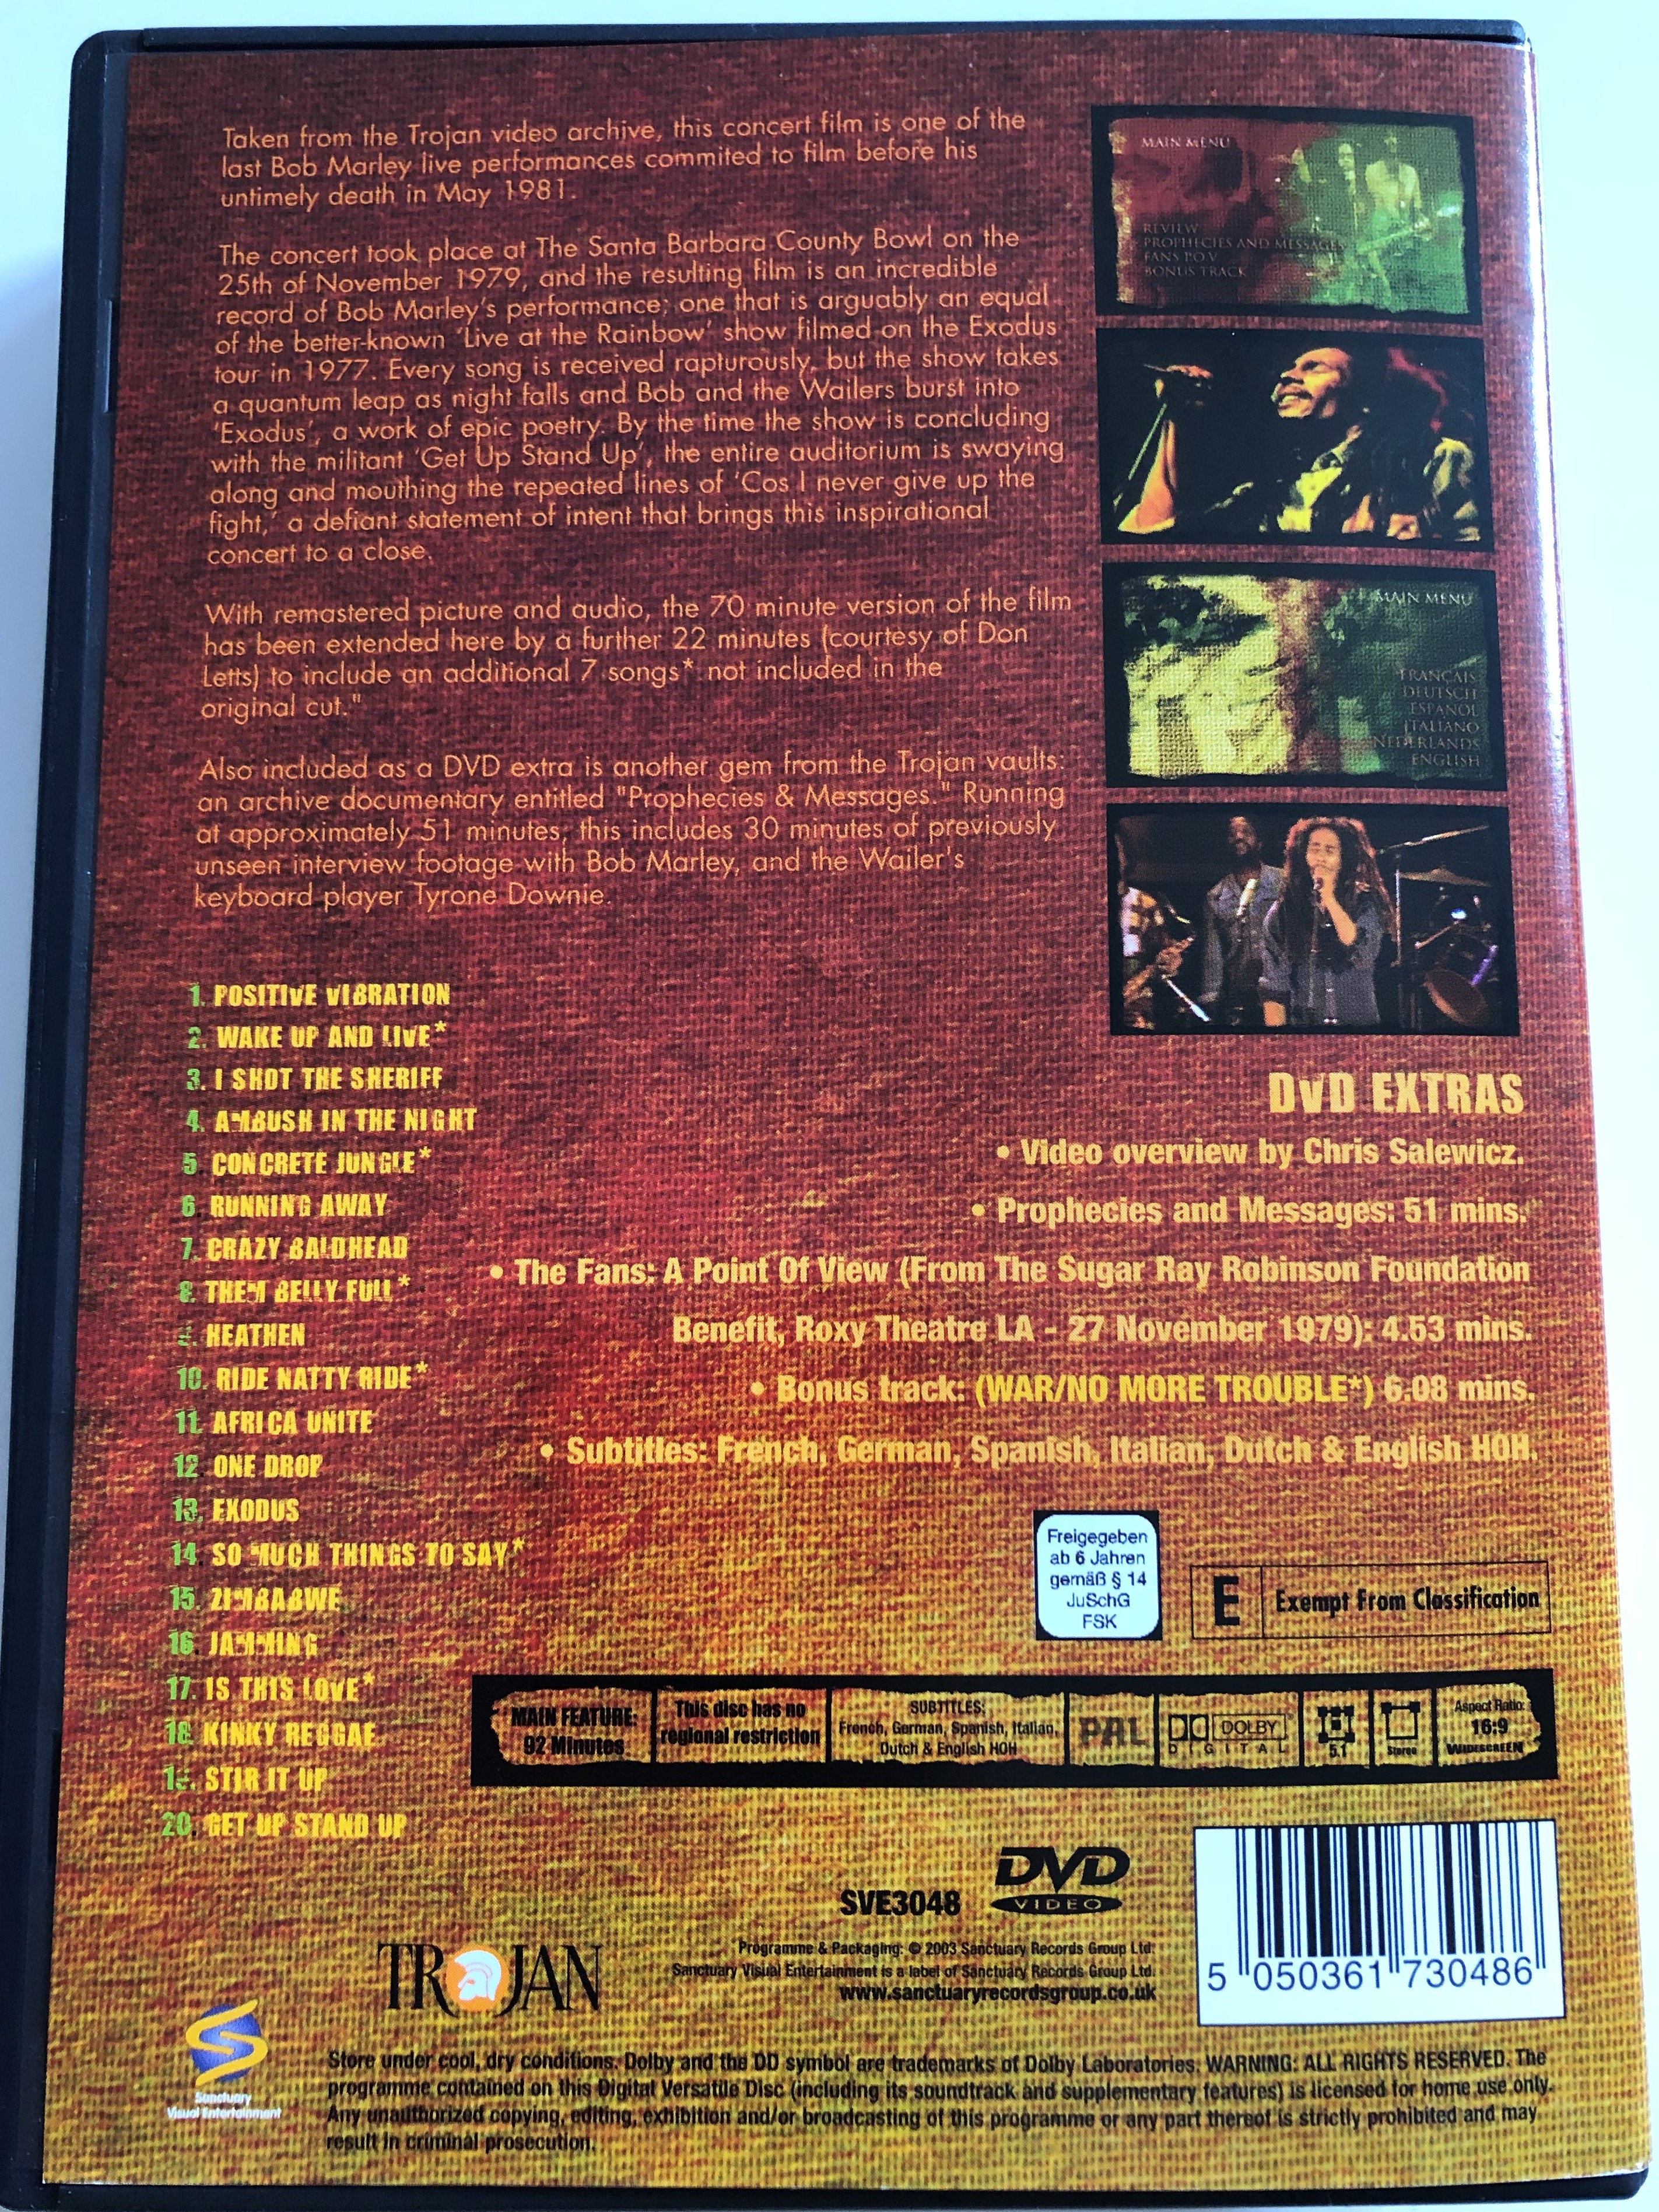 Bob Marley The Legend - Live DVD 2003 Santa Barbara County Bowl / November  25th 1979 / SVE 30048 - bibleinmylanguage